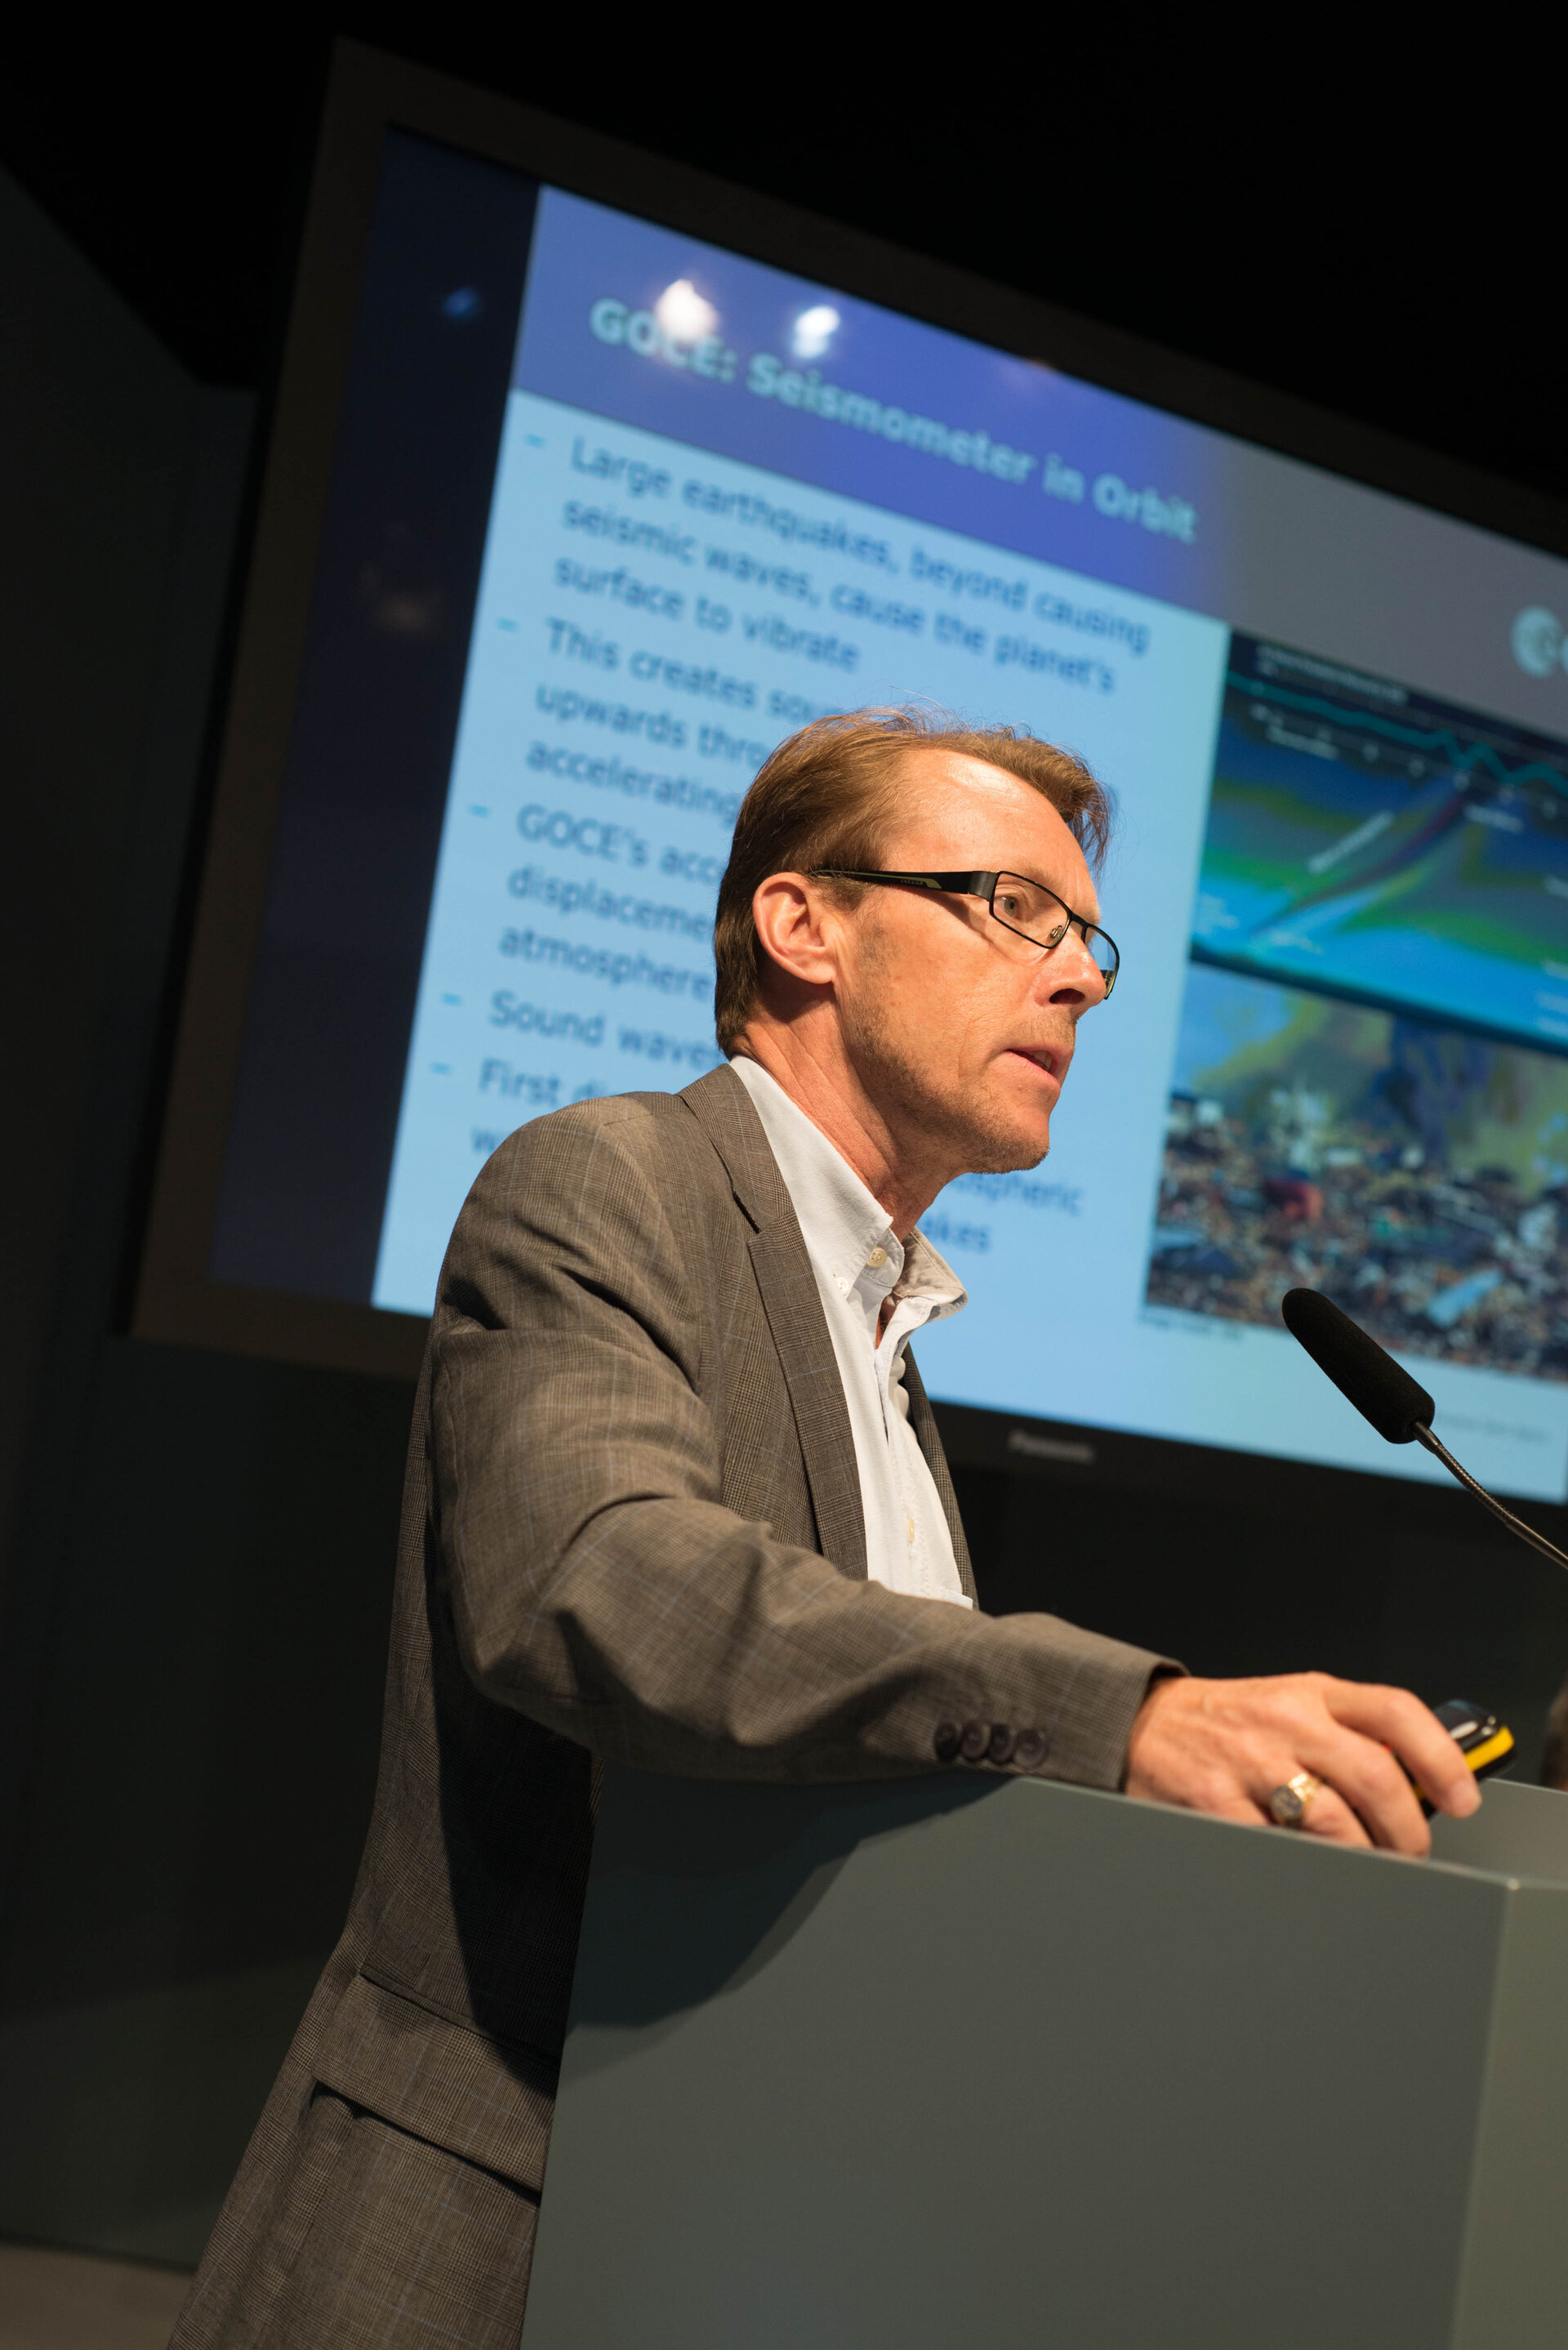 Johnny Johannessen during the presentation of Biomass